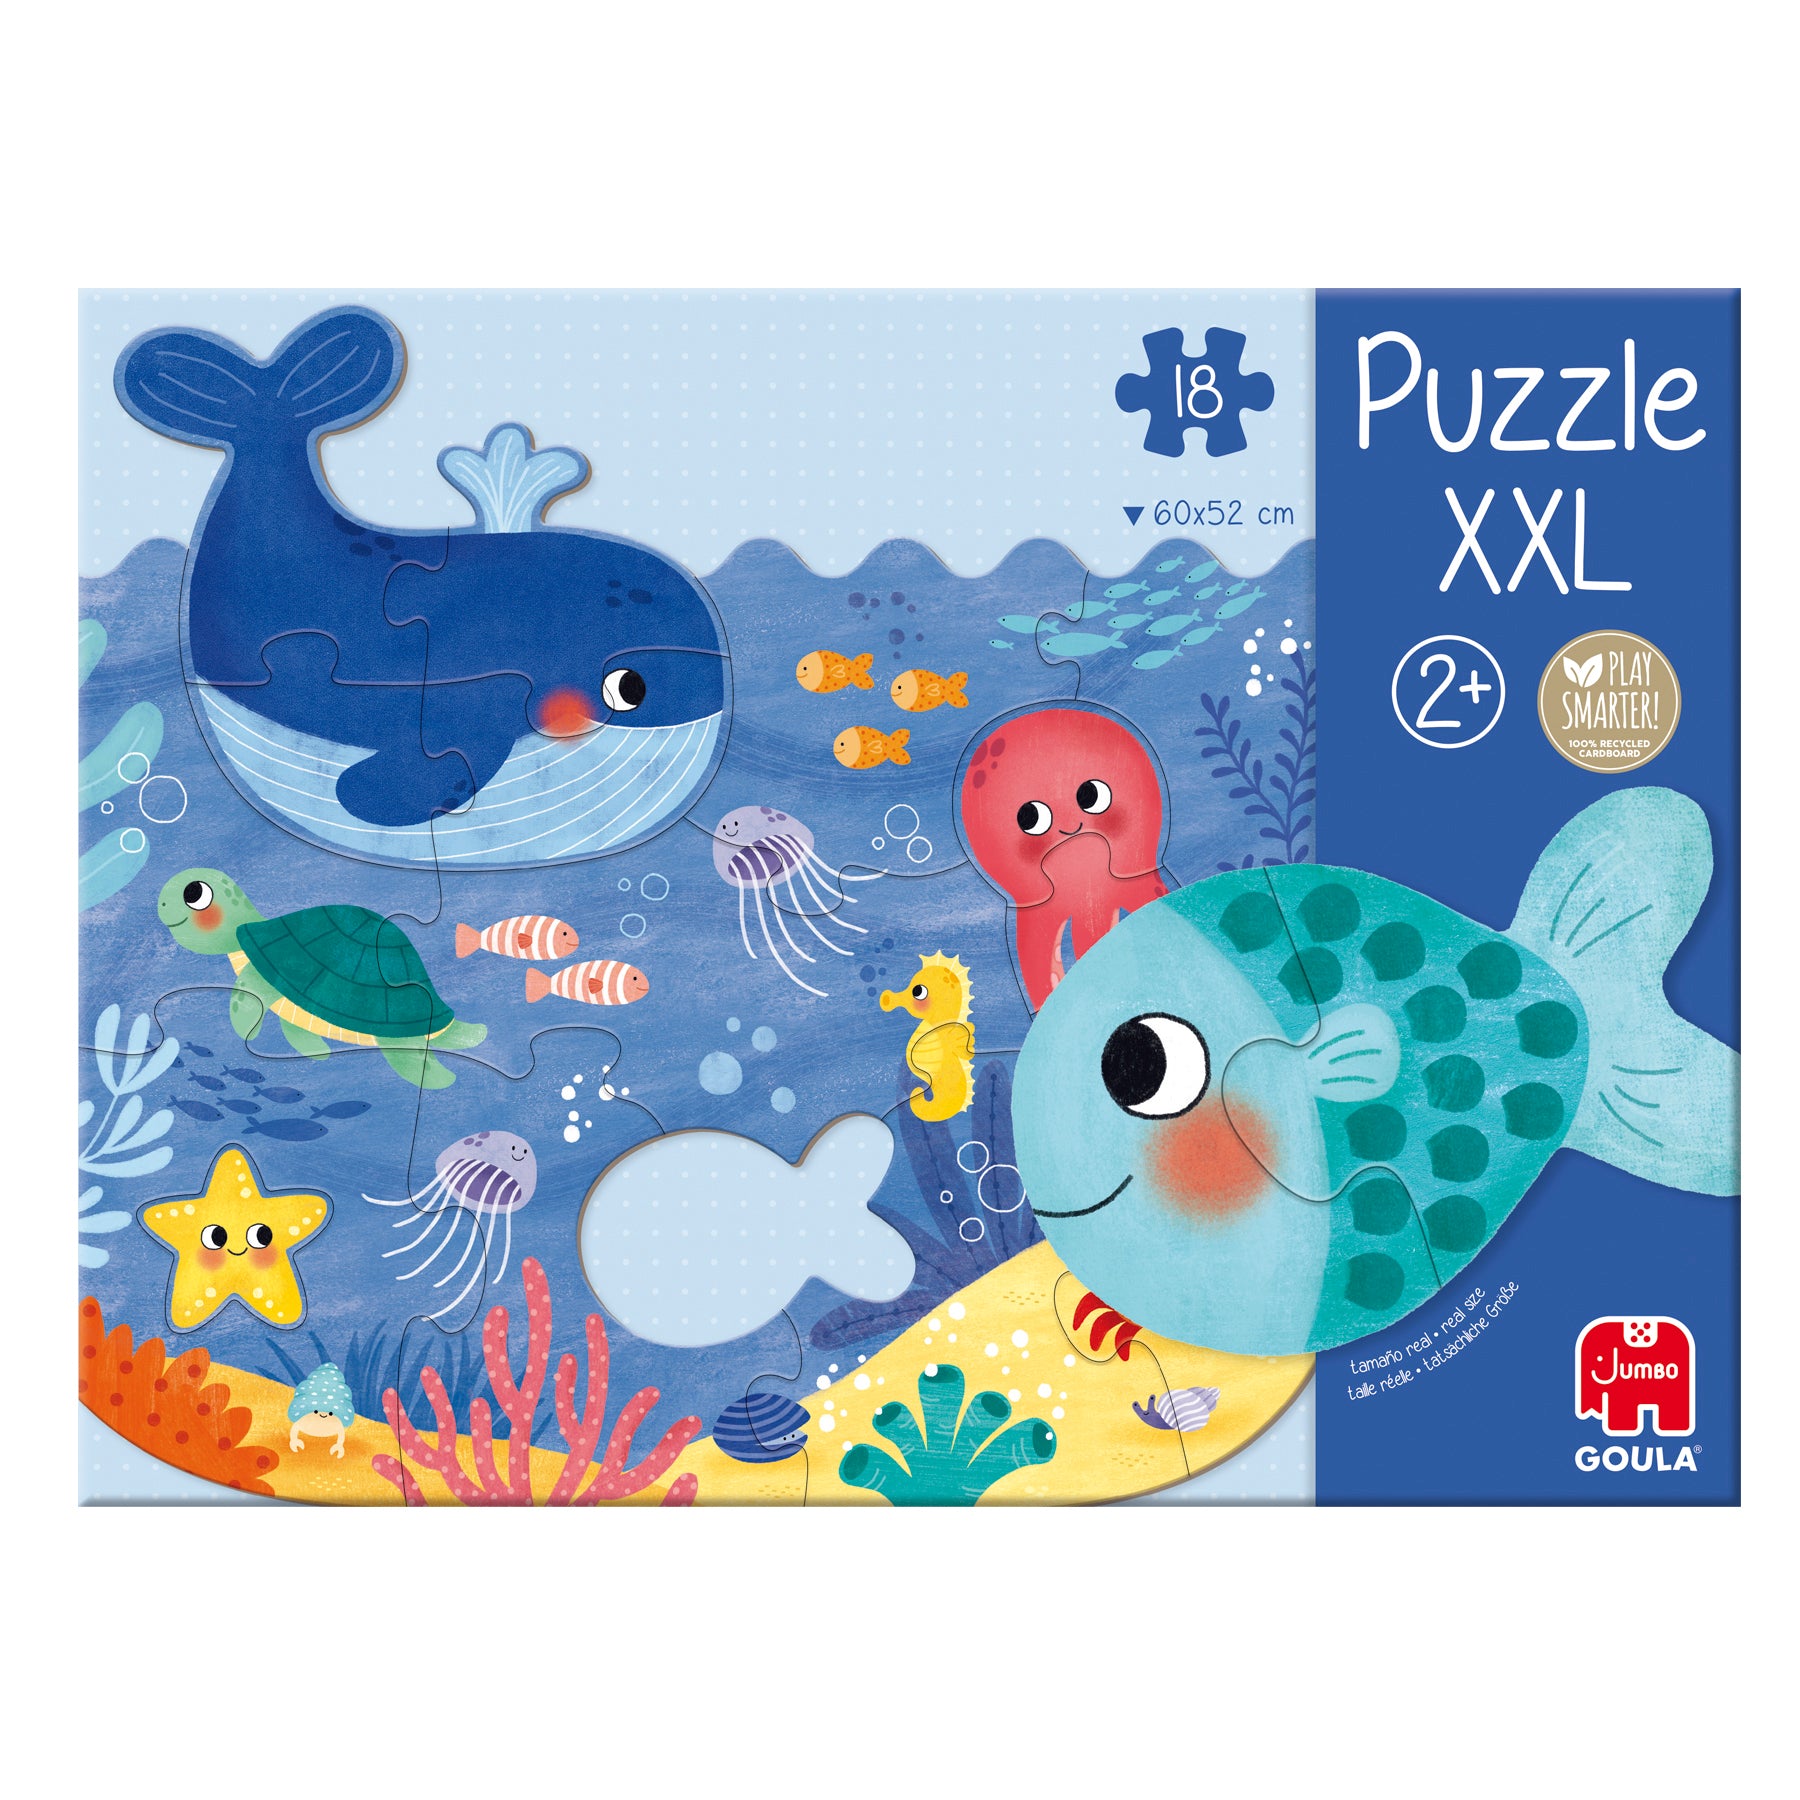 Puzzle xxl ocean - product image - Jumboplay.com